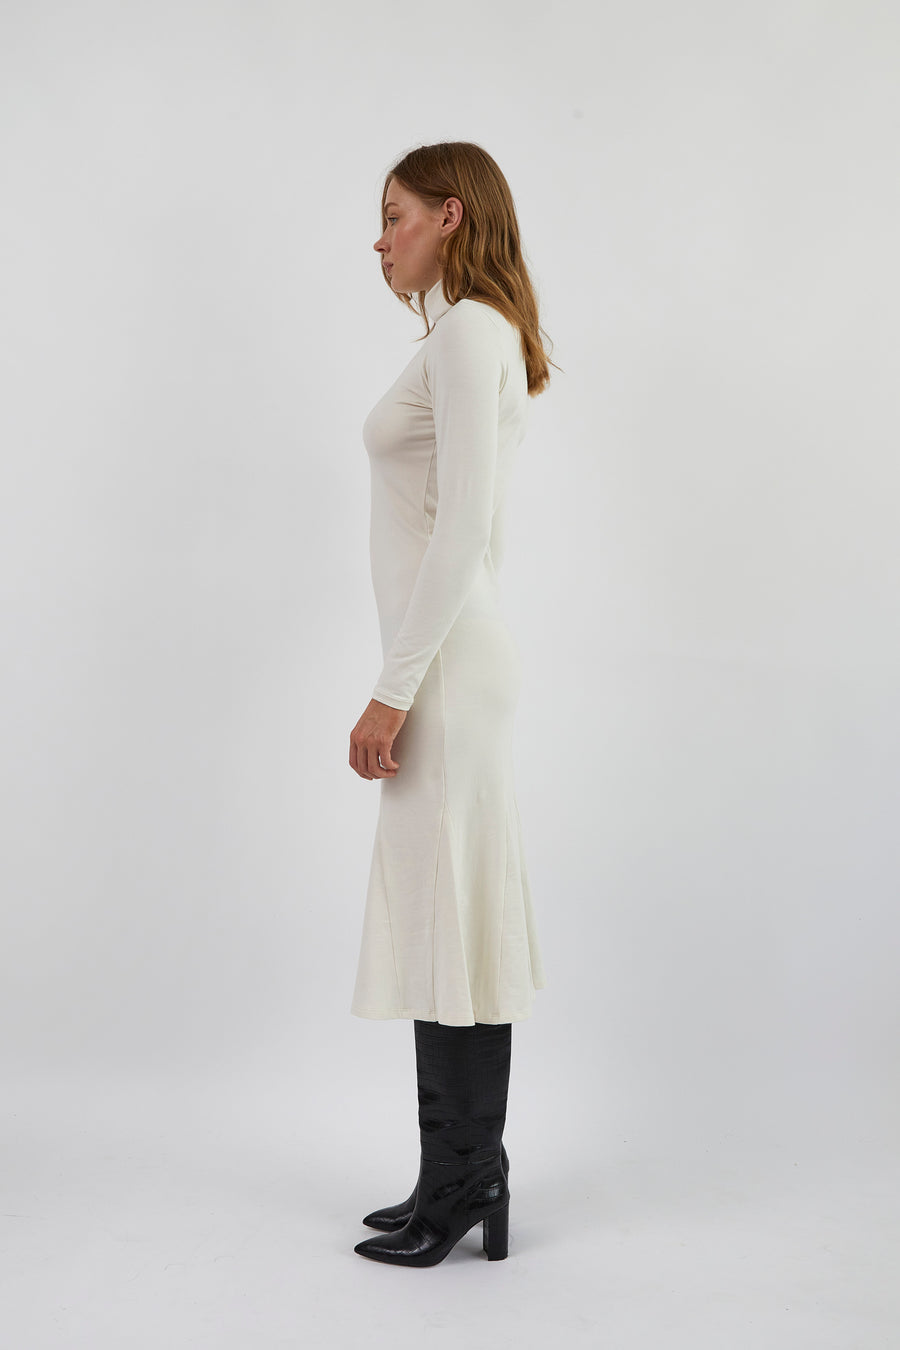 Melancolia Light white dress